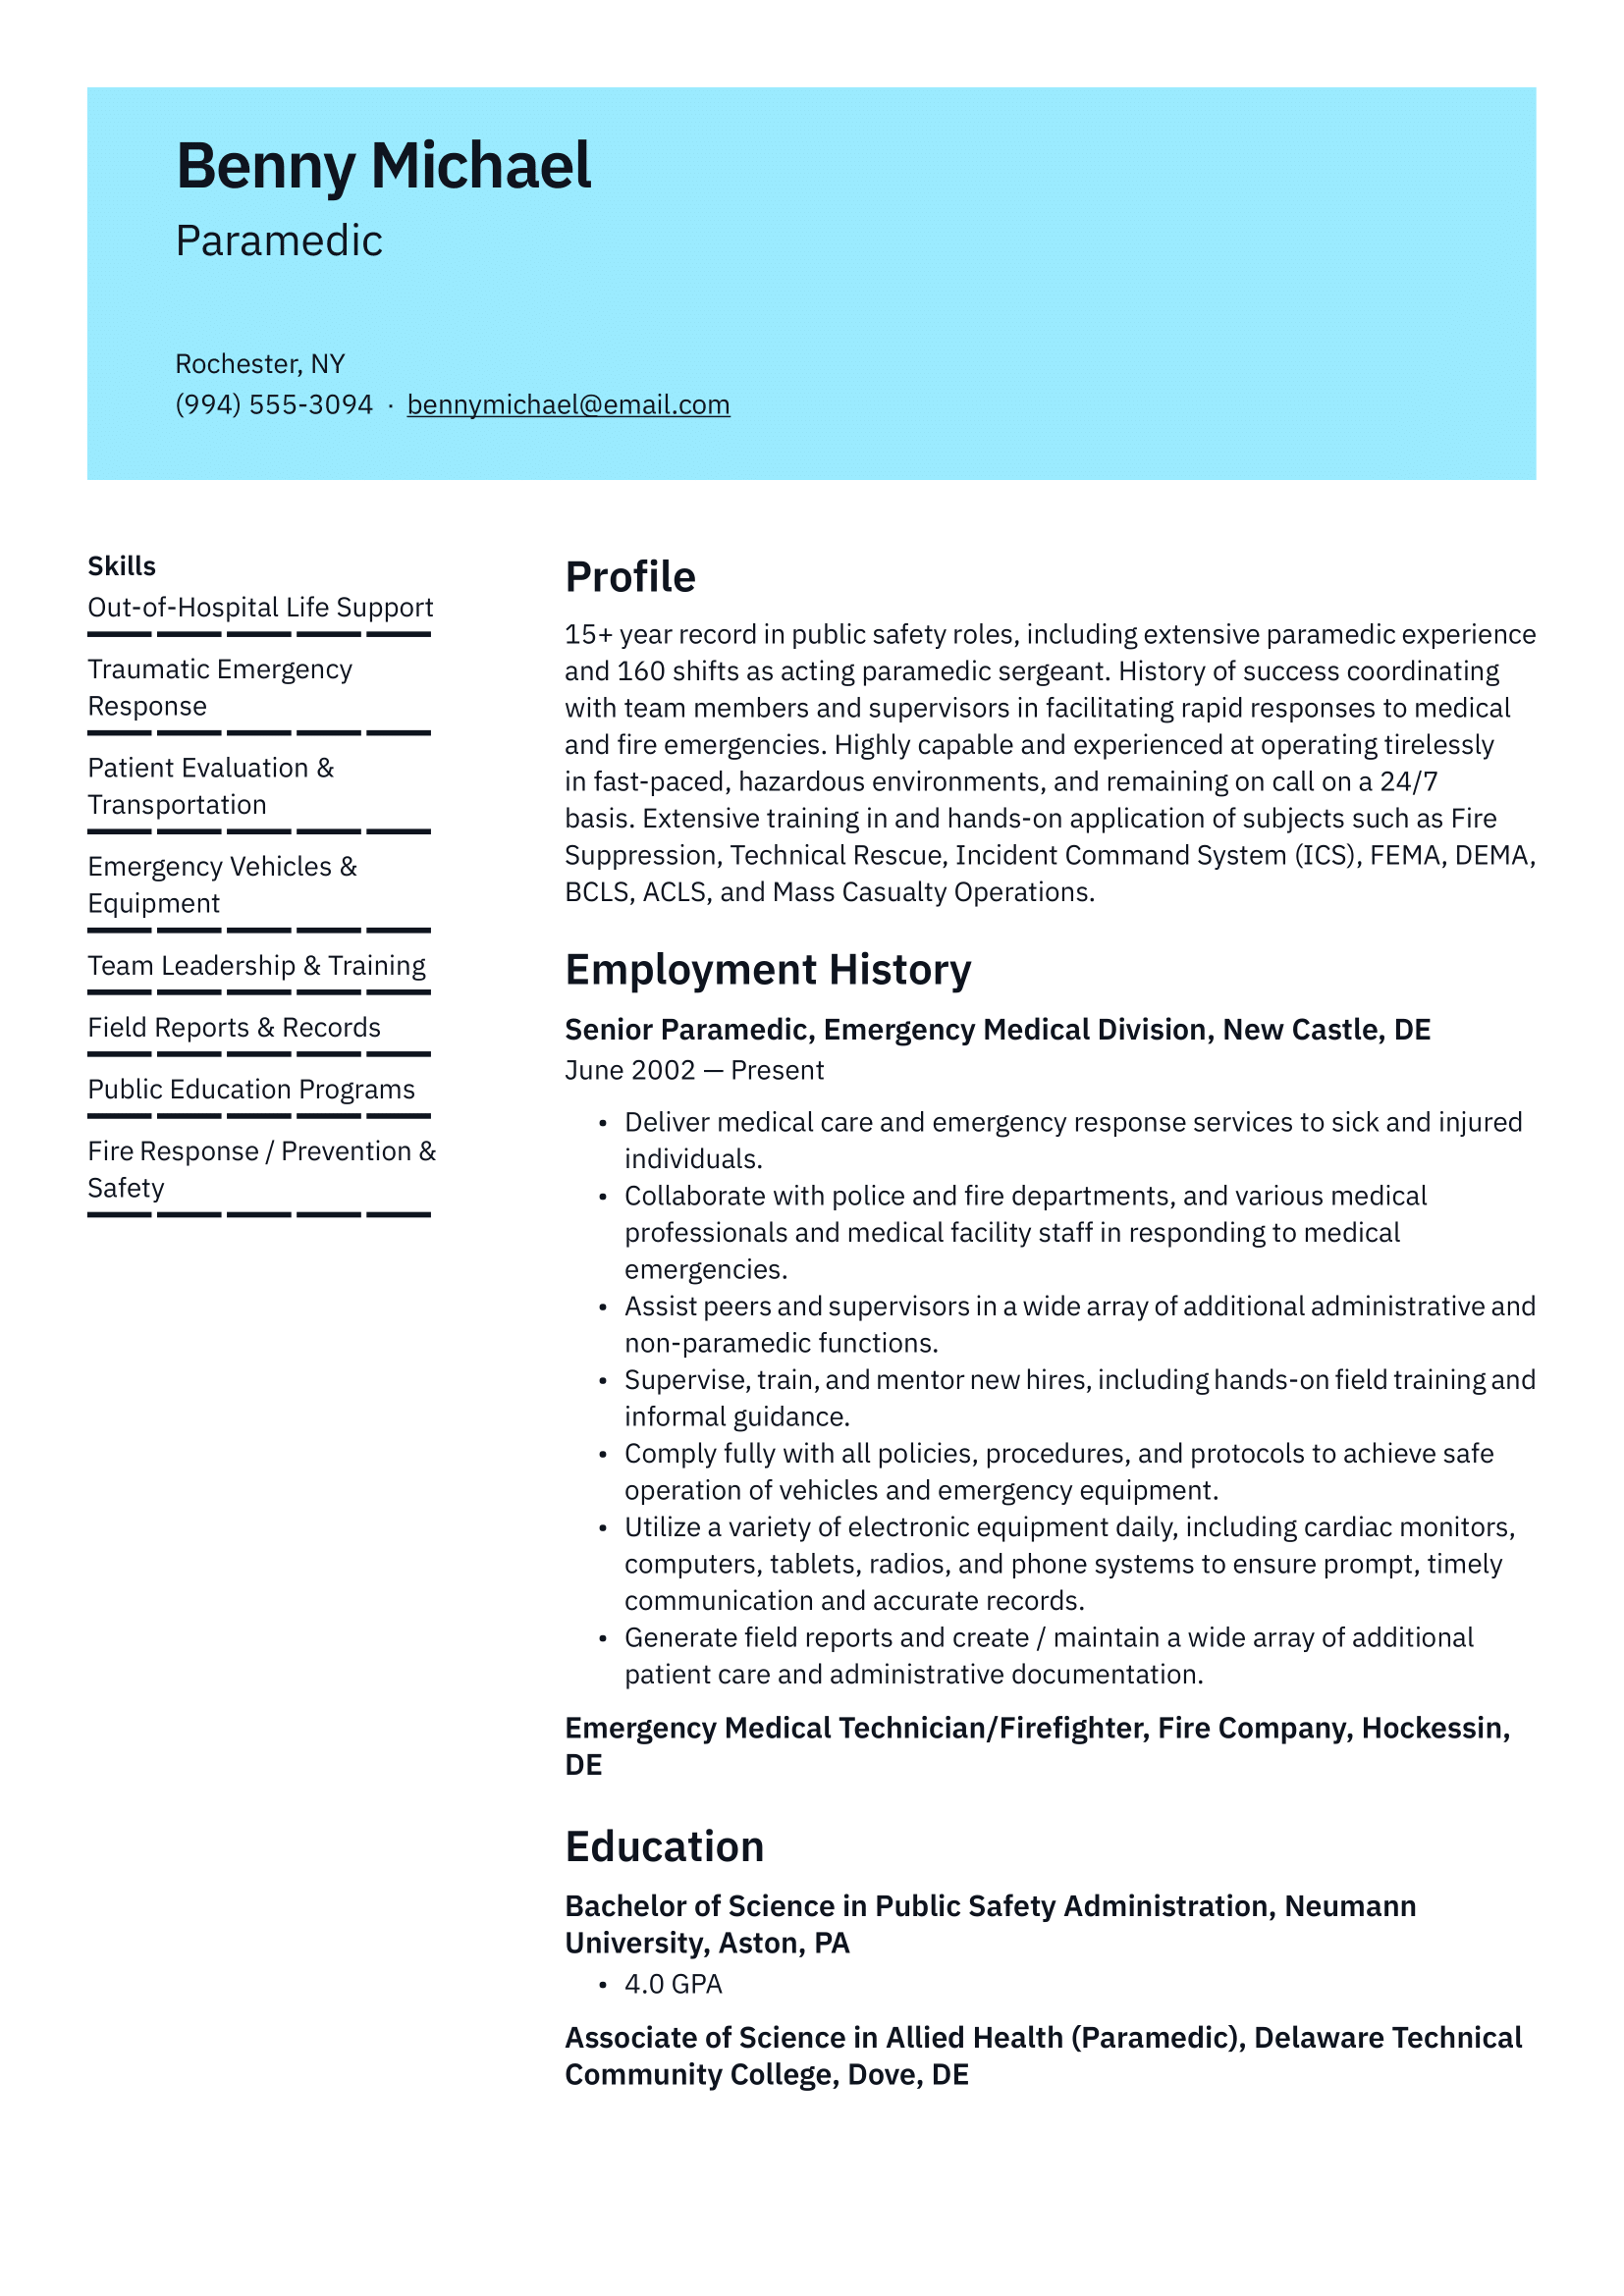 Paramedic Resume Example & Writing Guide